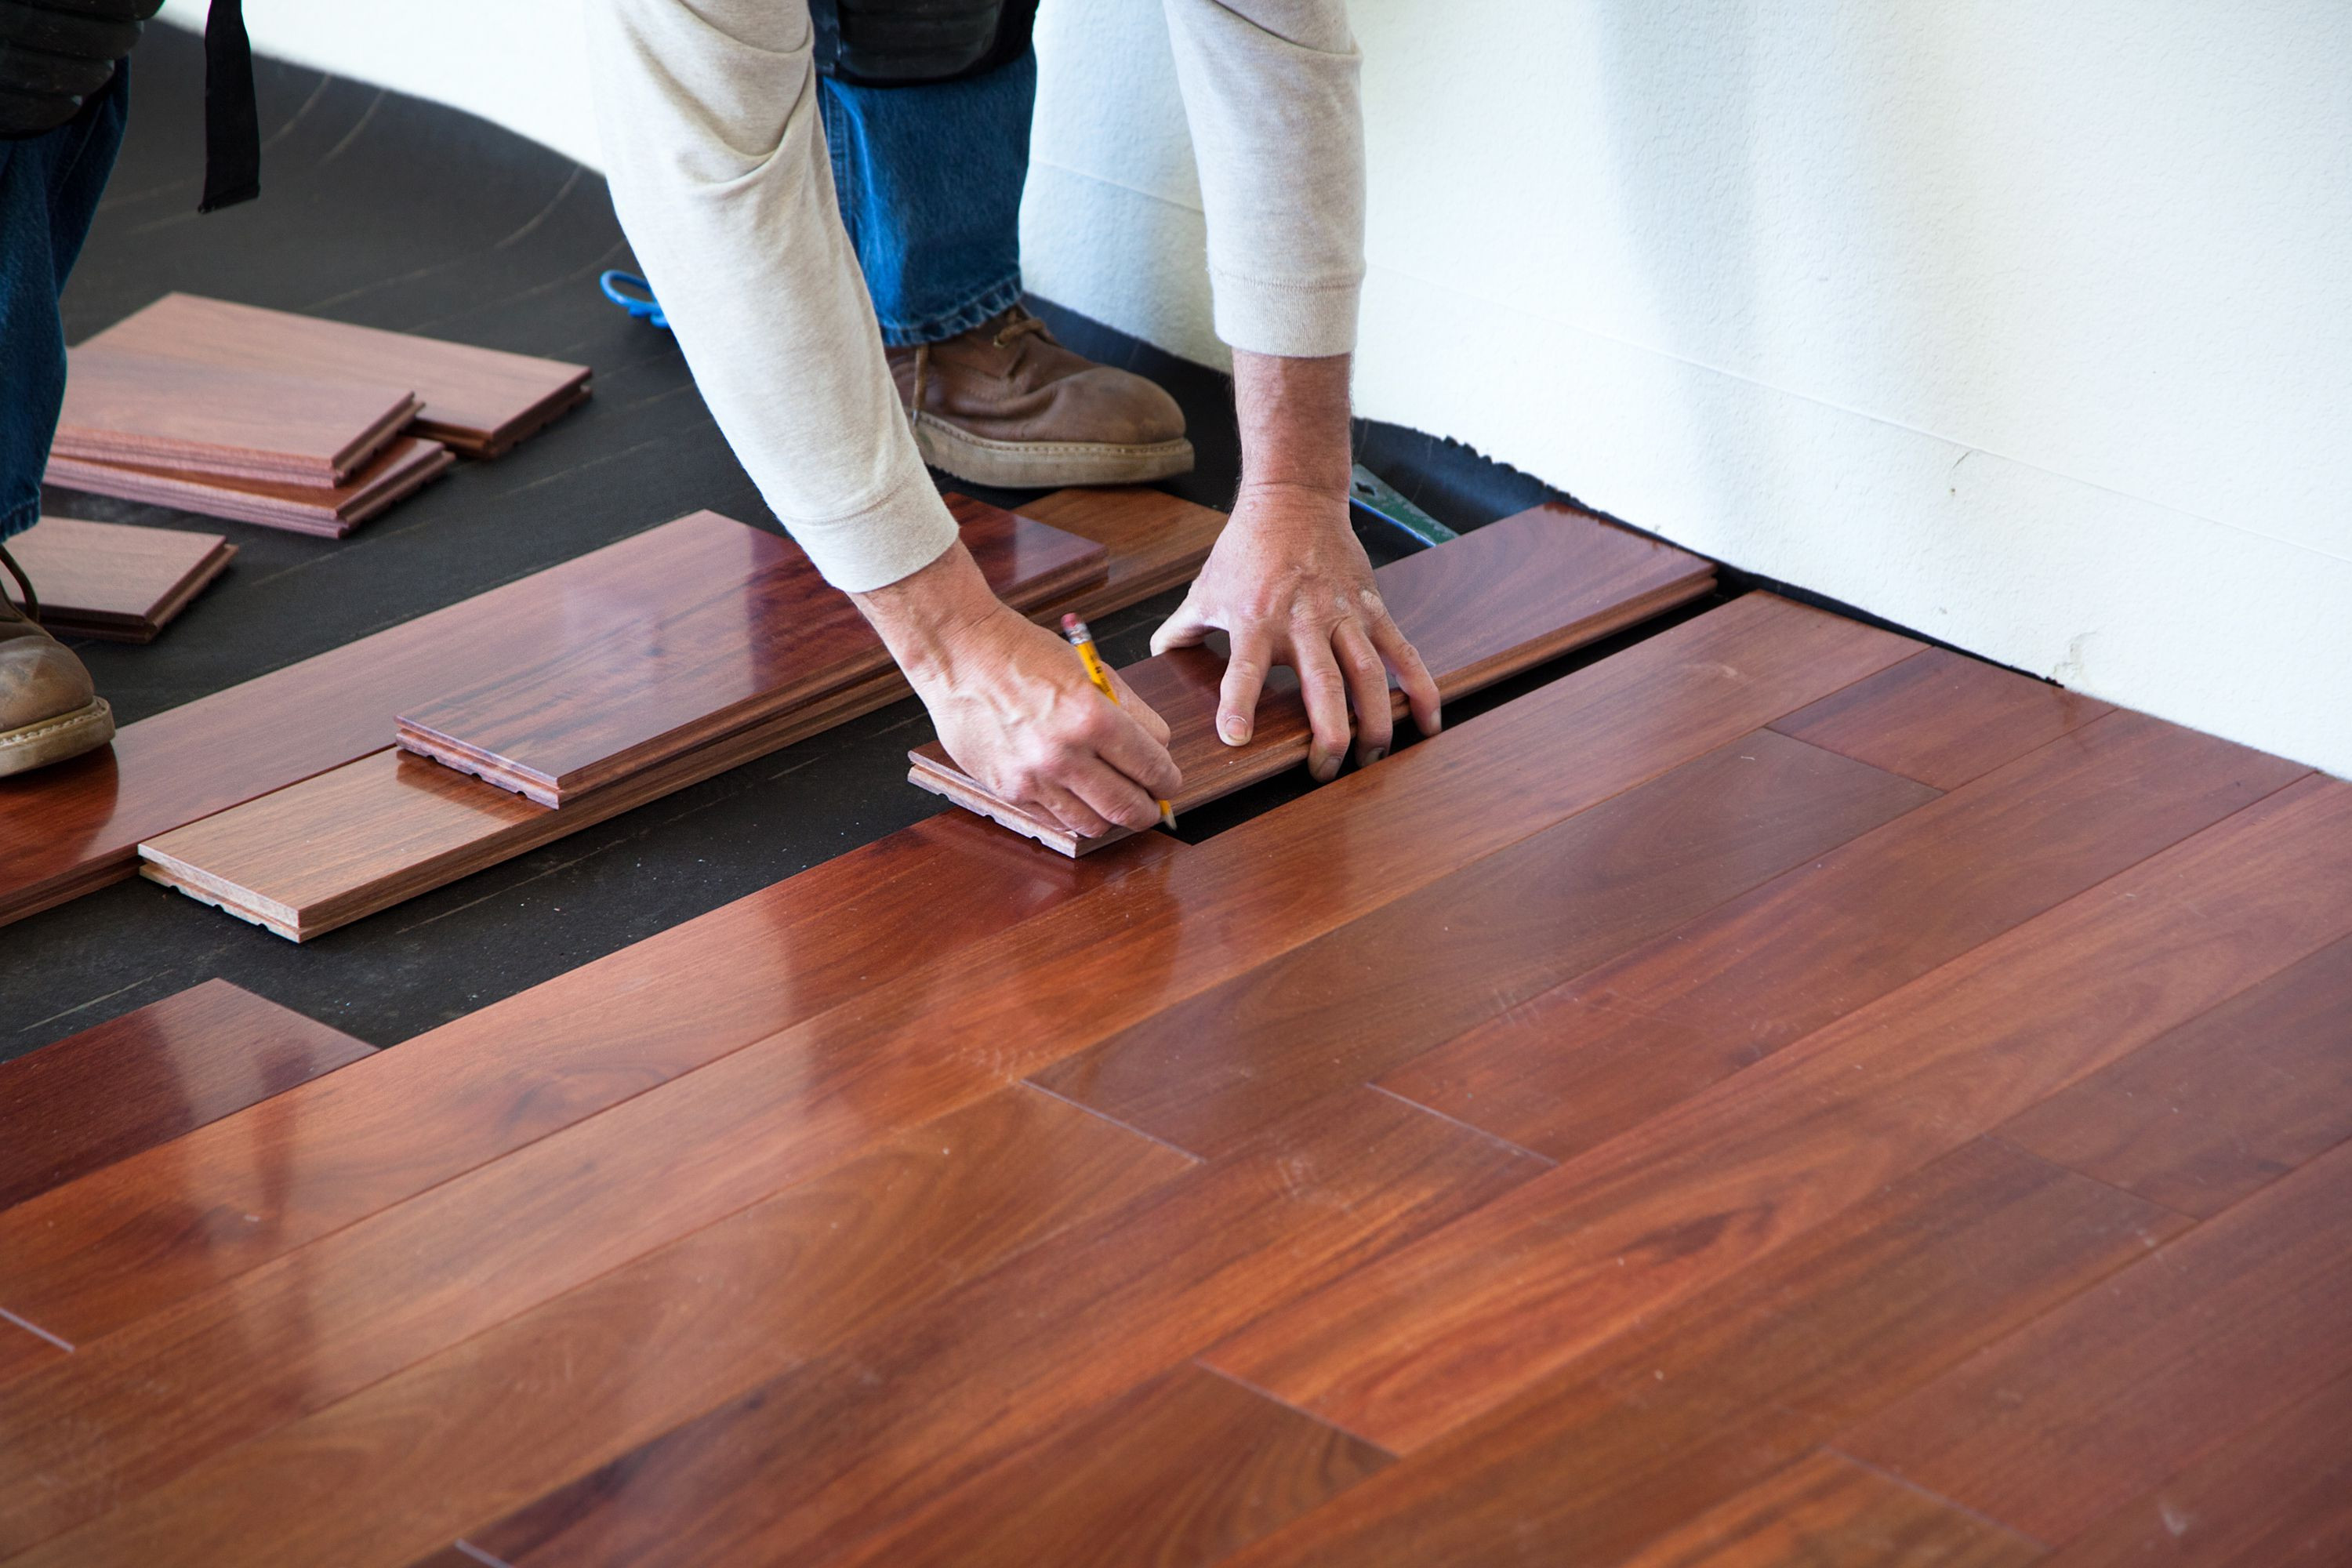 hardwood floor dent repair kit of the subfloor is the foundation of a good floor for installing hardwood floor 170040982 582b748c5f9b58d5b17d0c58